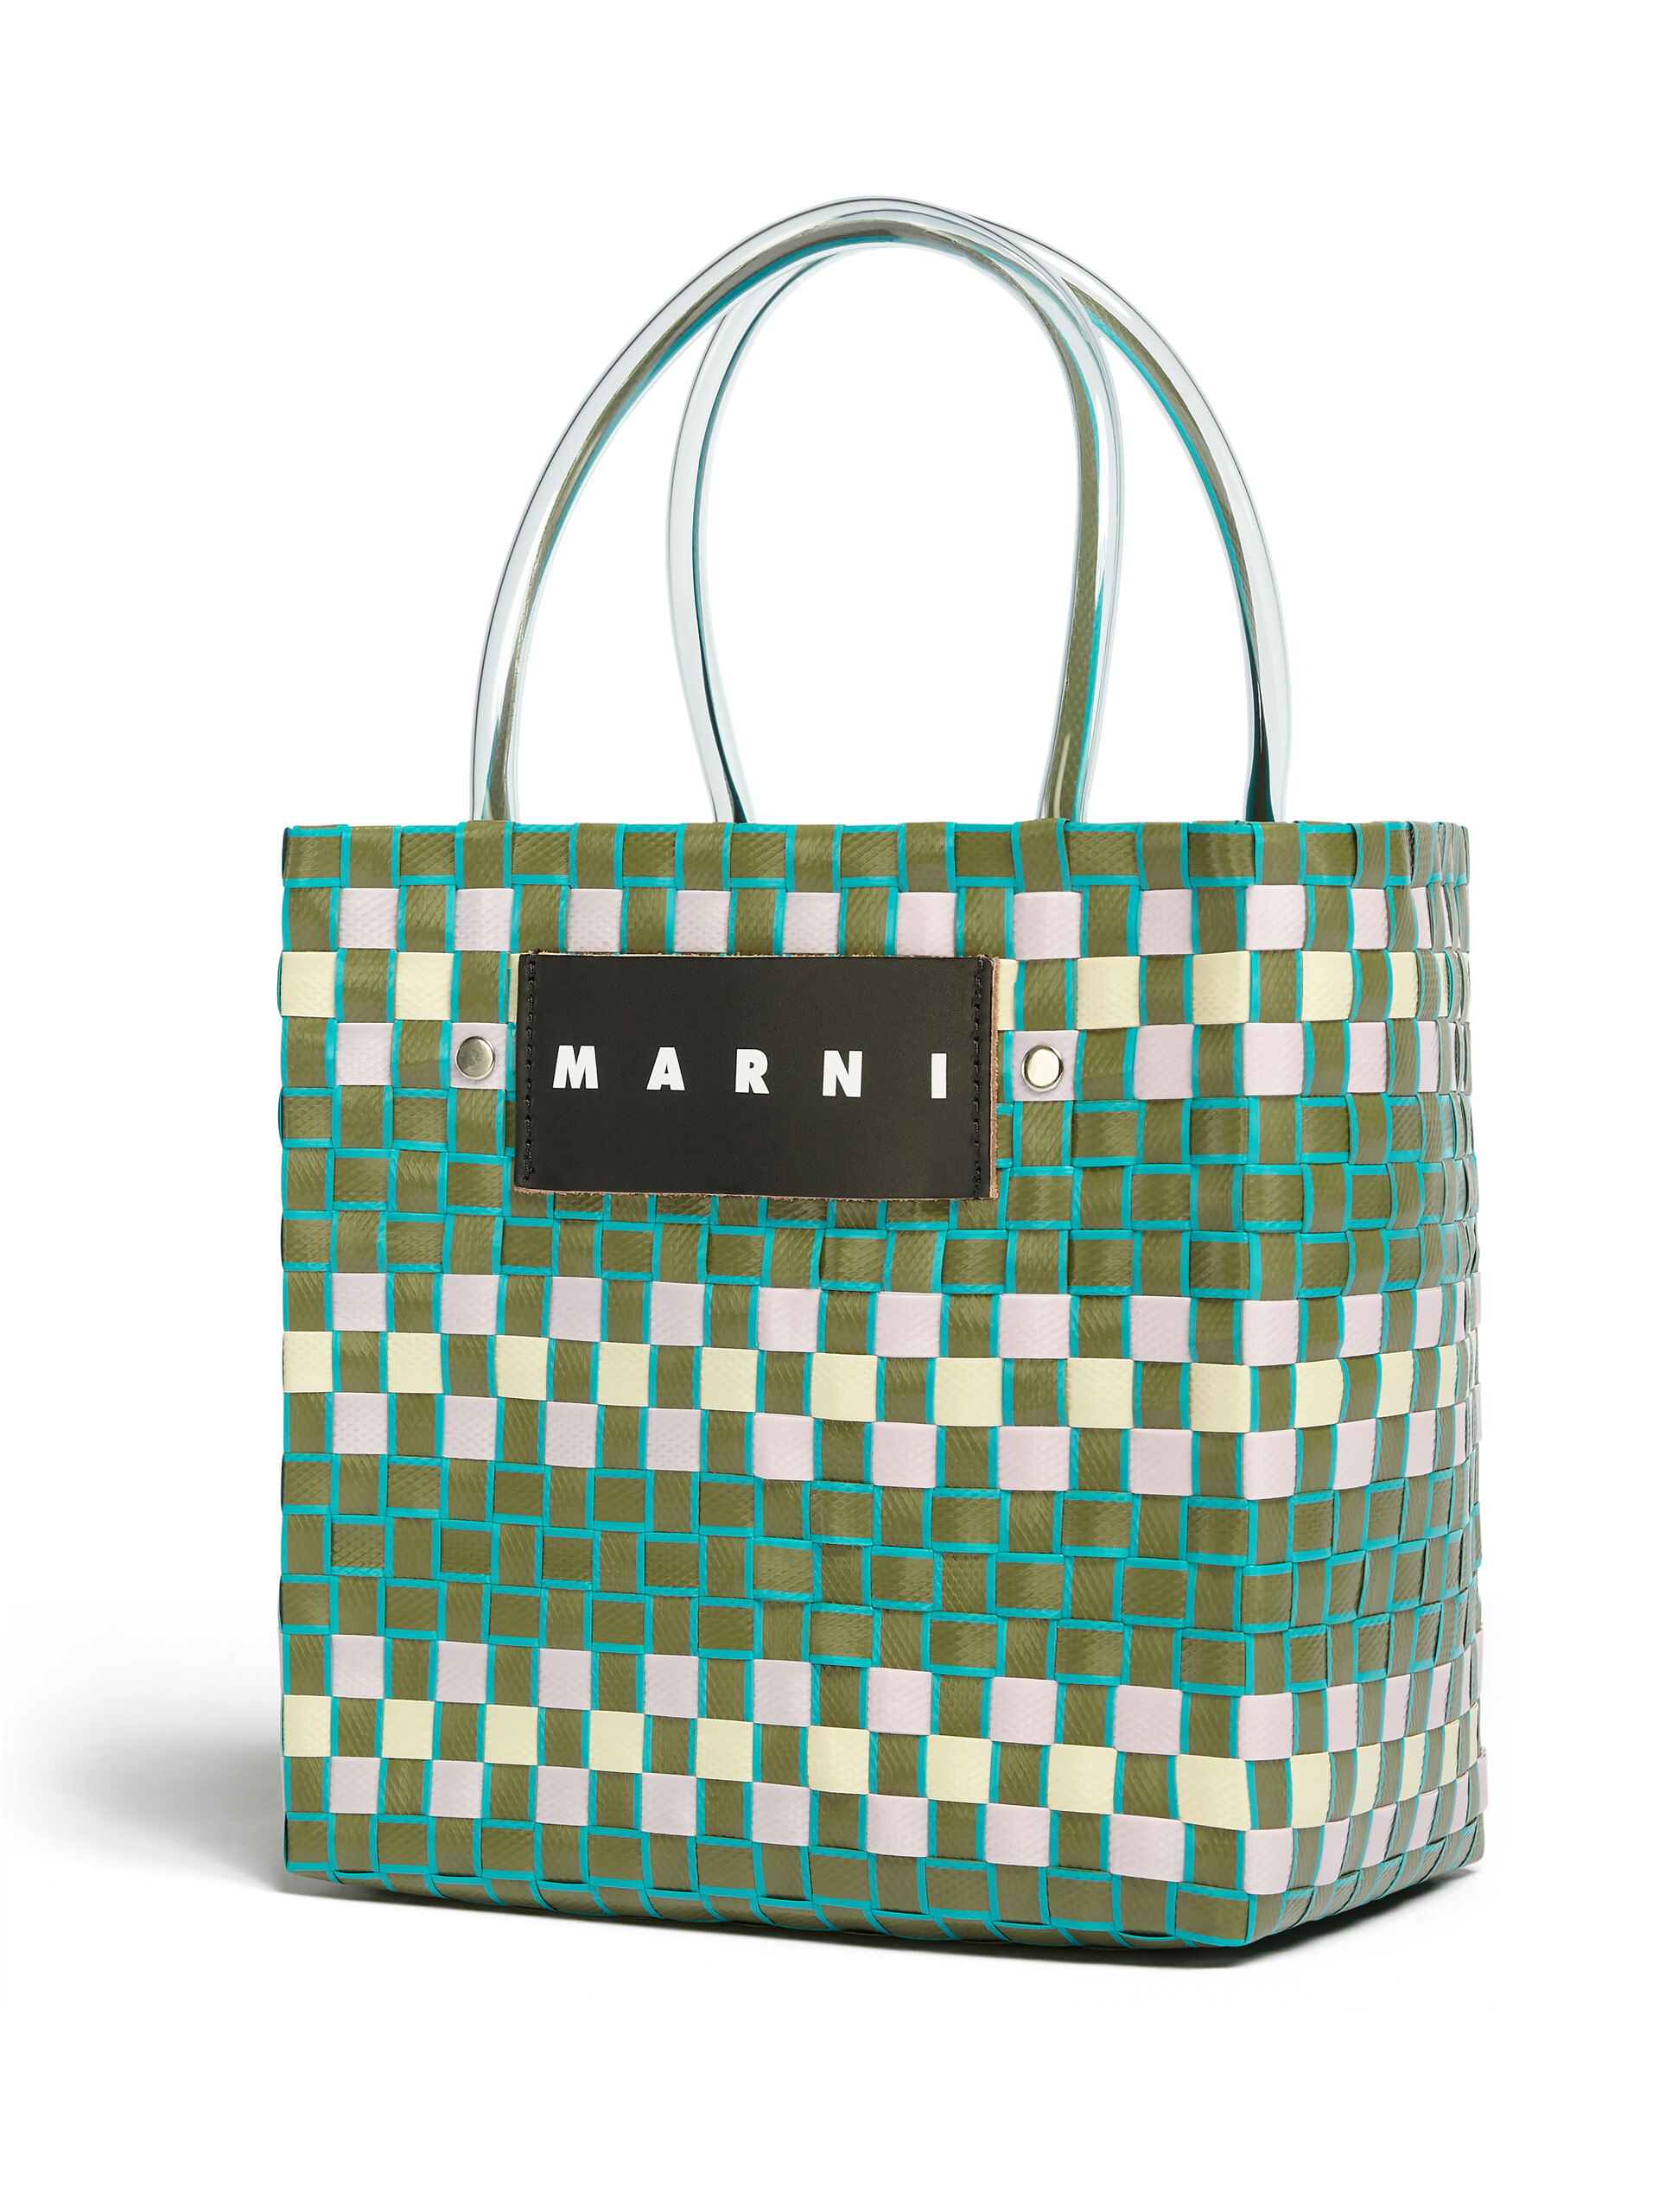 MARNI MARKET shopping bag in green polypropylene - Bags - Image 4